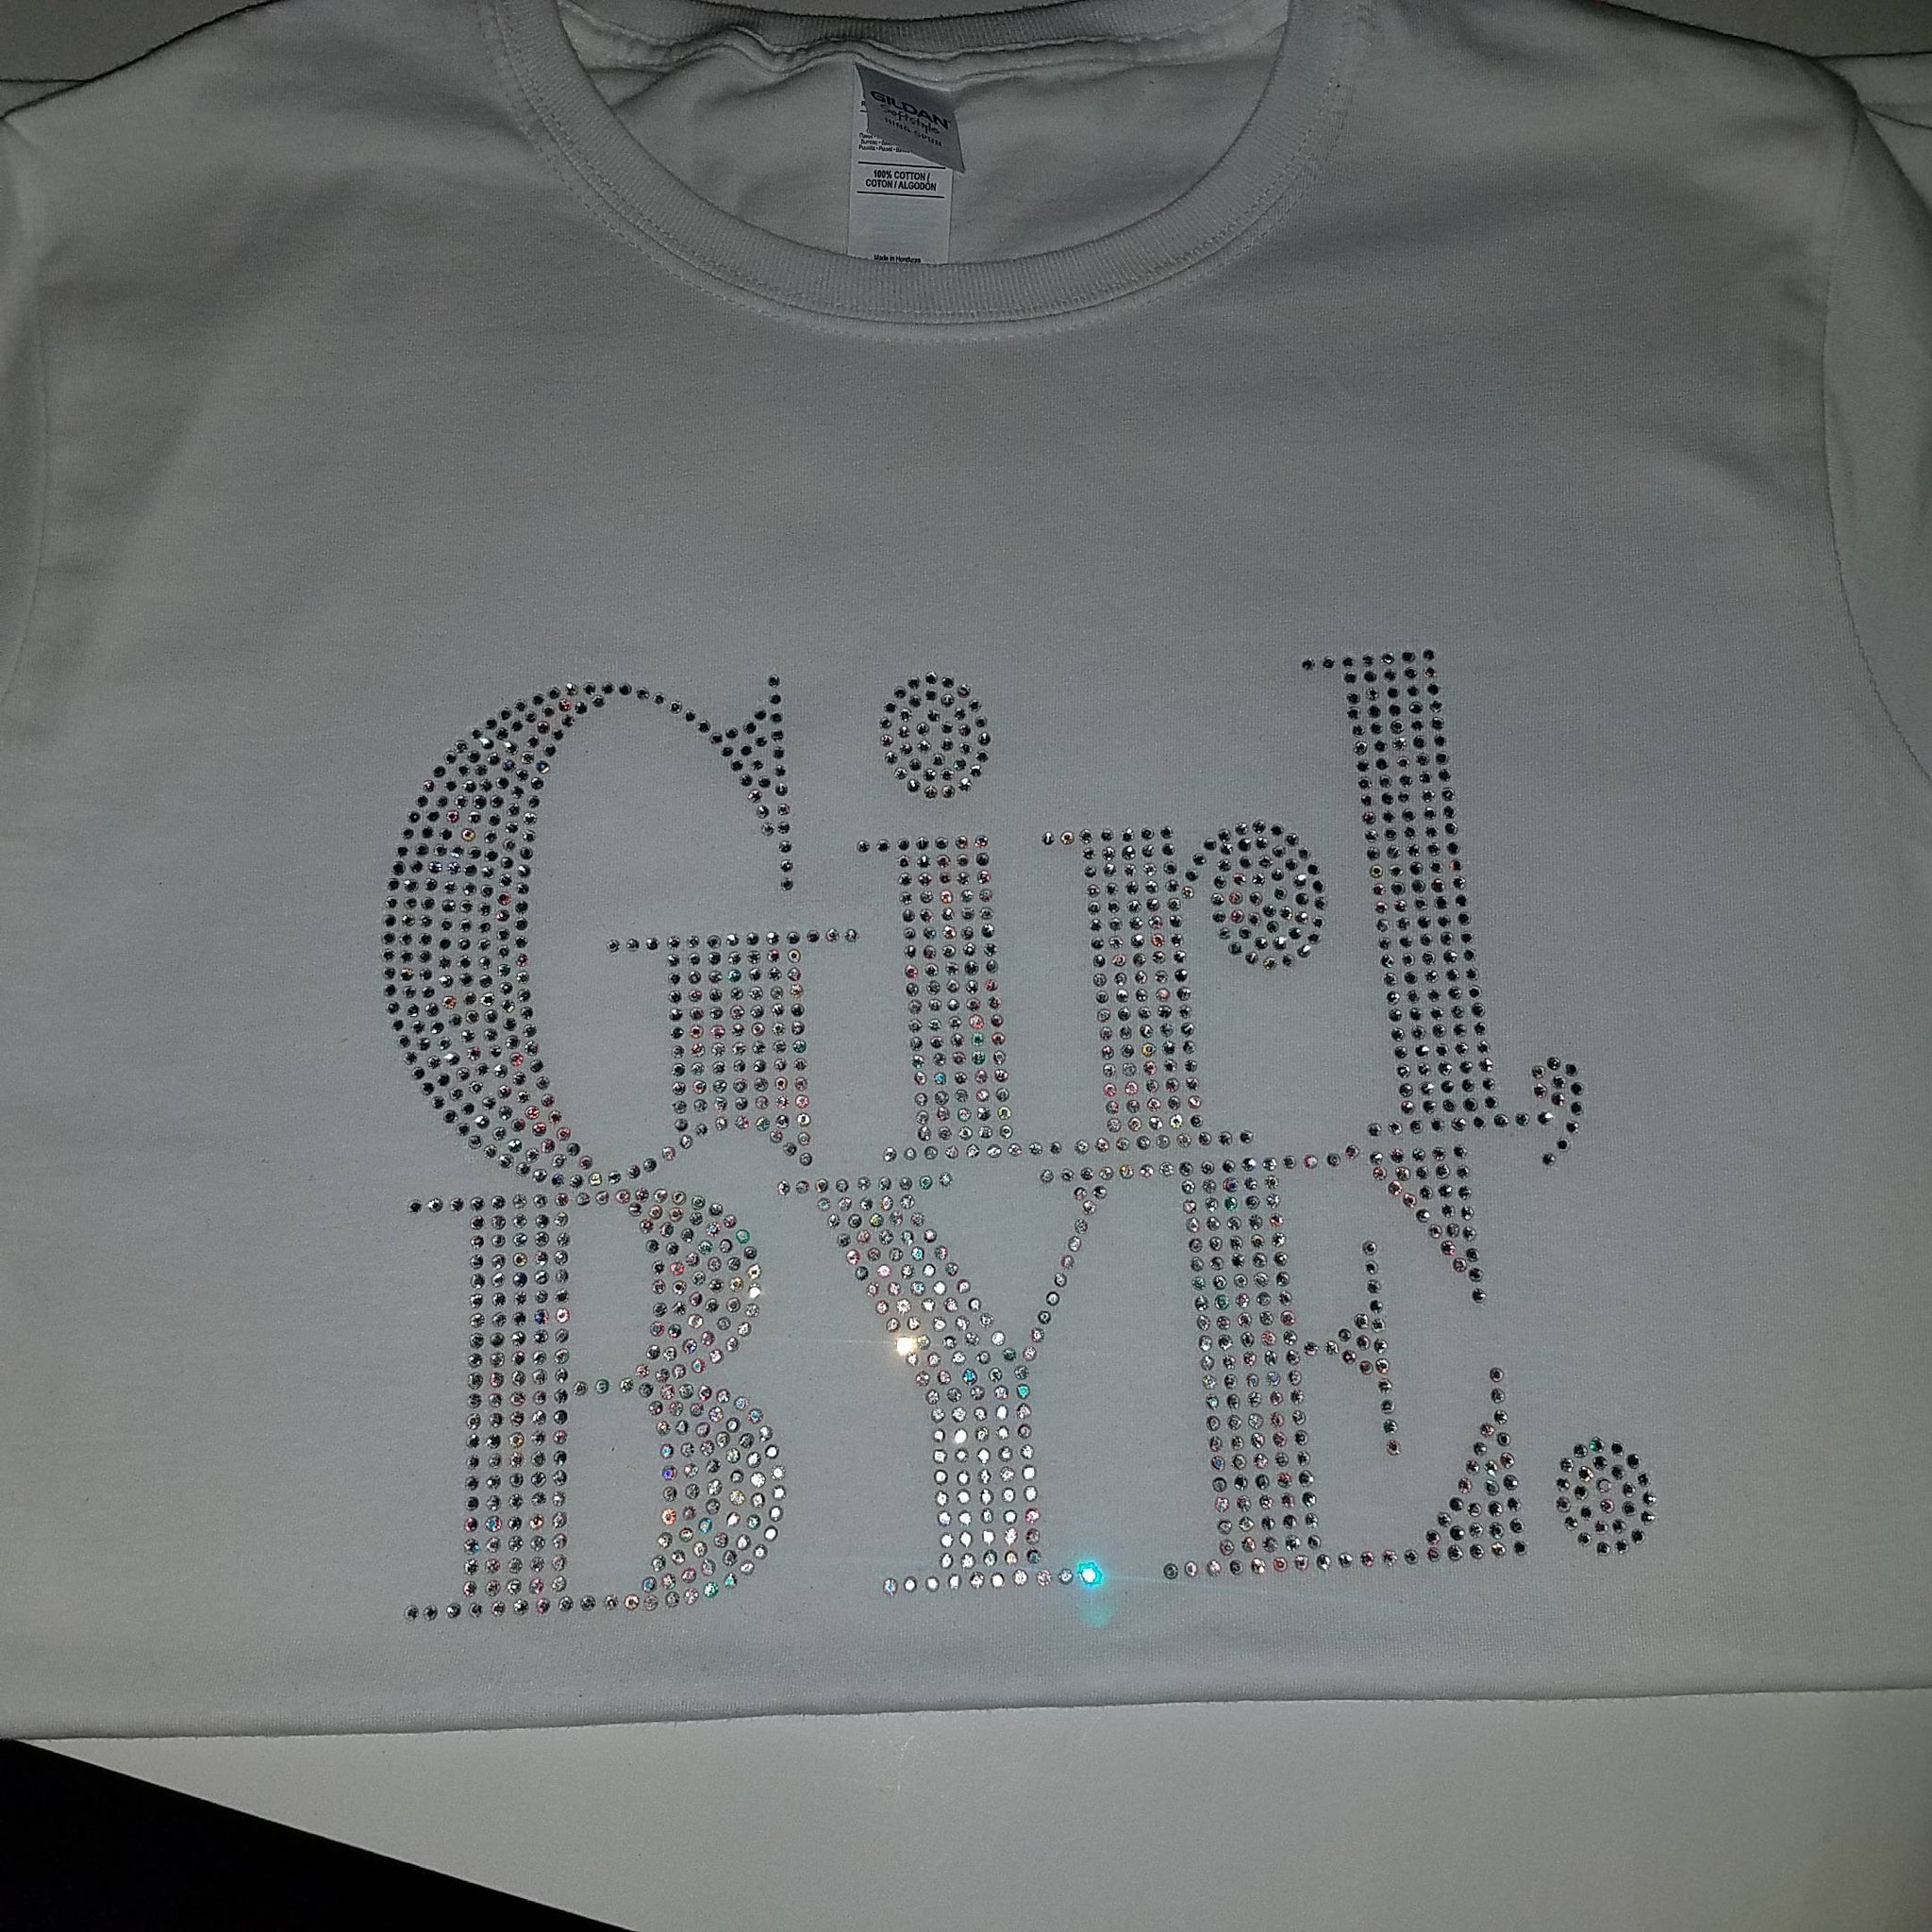 Popular, BLING T-shirt, "Girl Bye" *AB Crystal Sparkling Rhinestones*, Graphic Tee, Popular Shirt, Gifts for Her, Fashion Shirt, Wordy Shirt